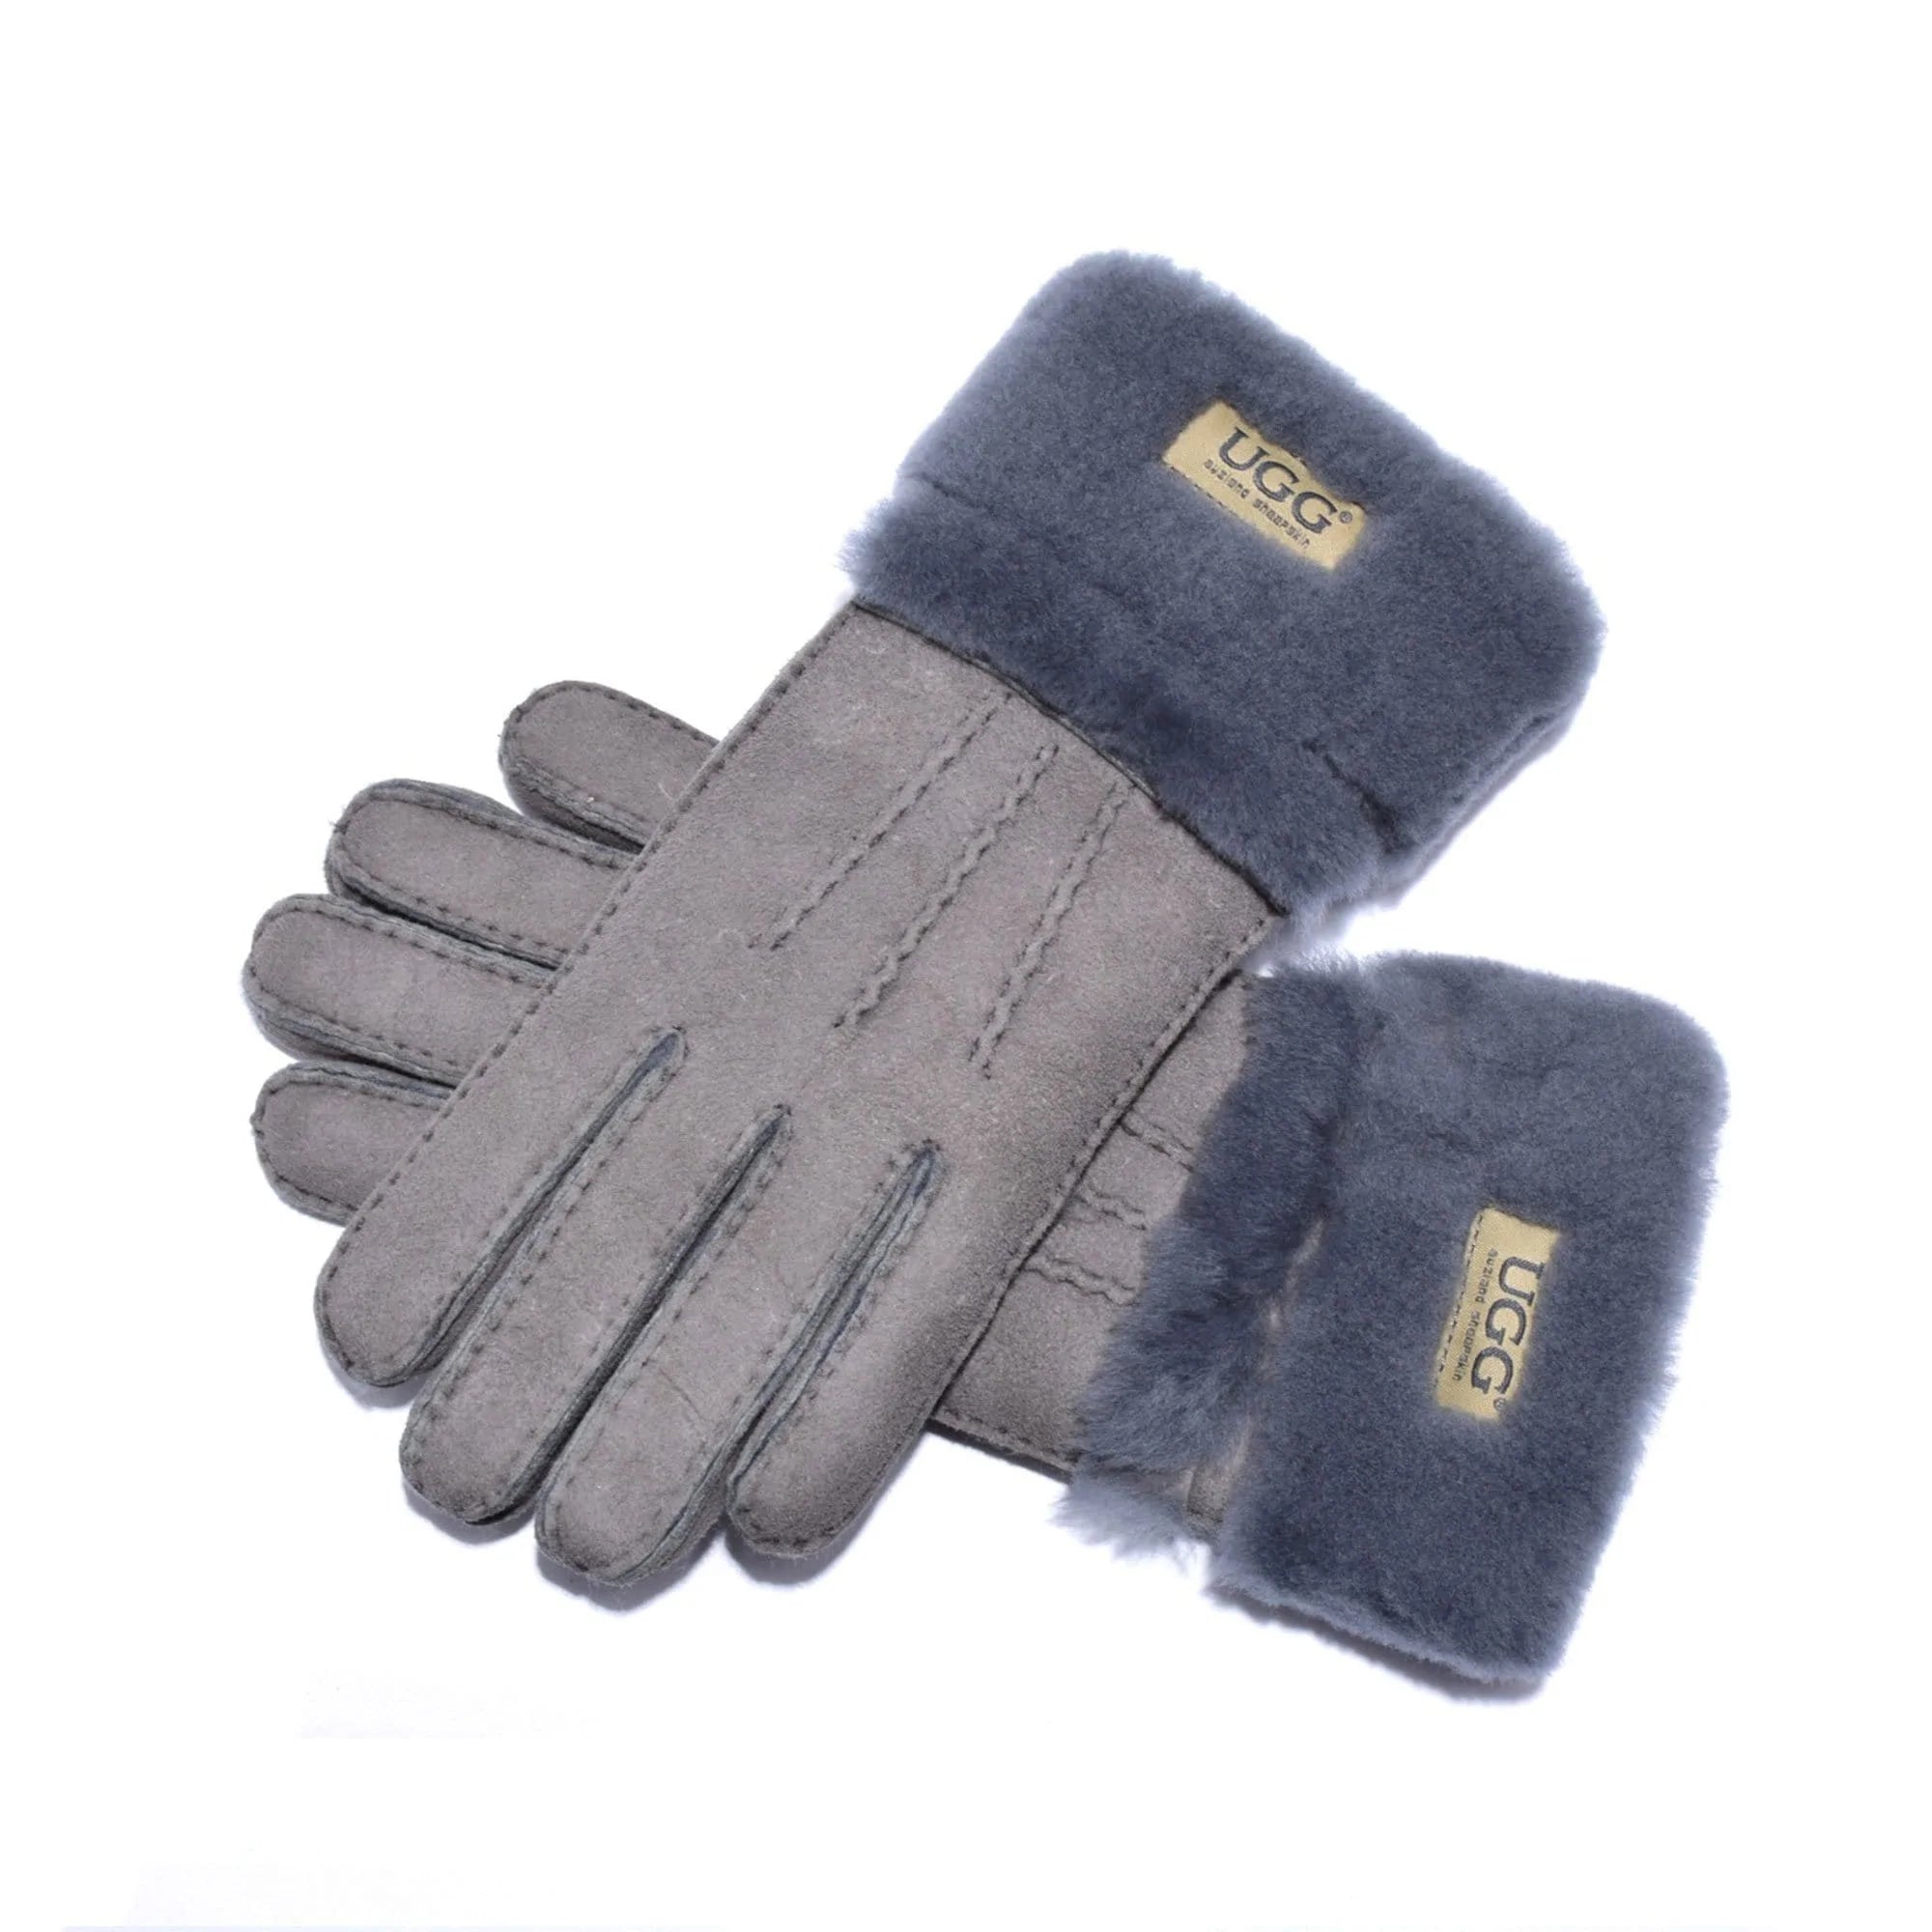  - UGG Double Cuff Sheepskin Gloves - Original UGG Australia Classic